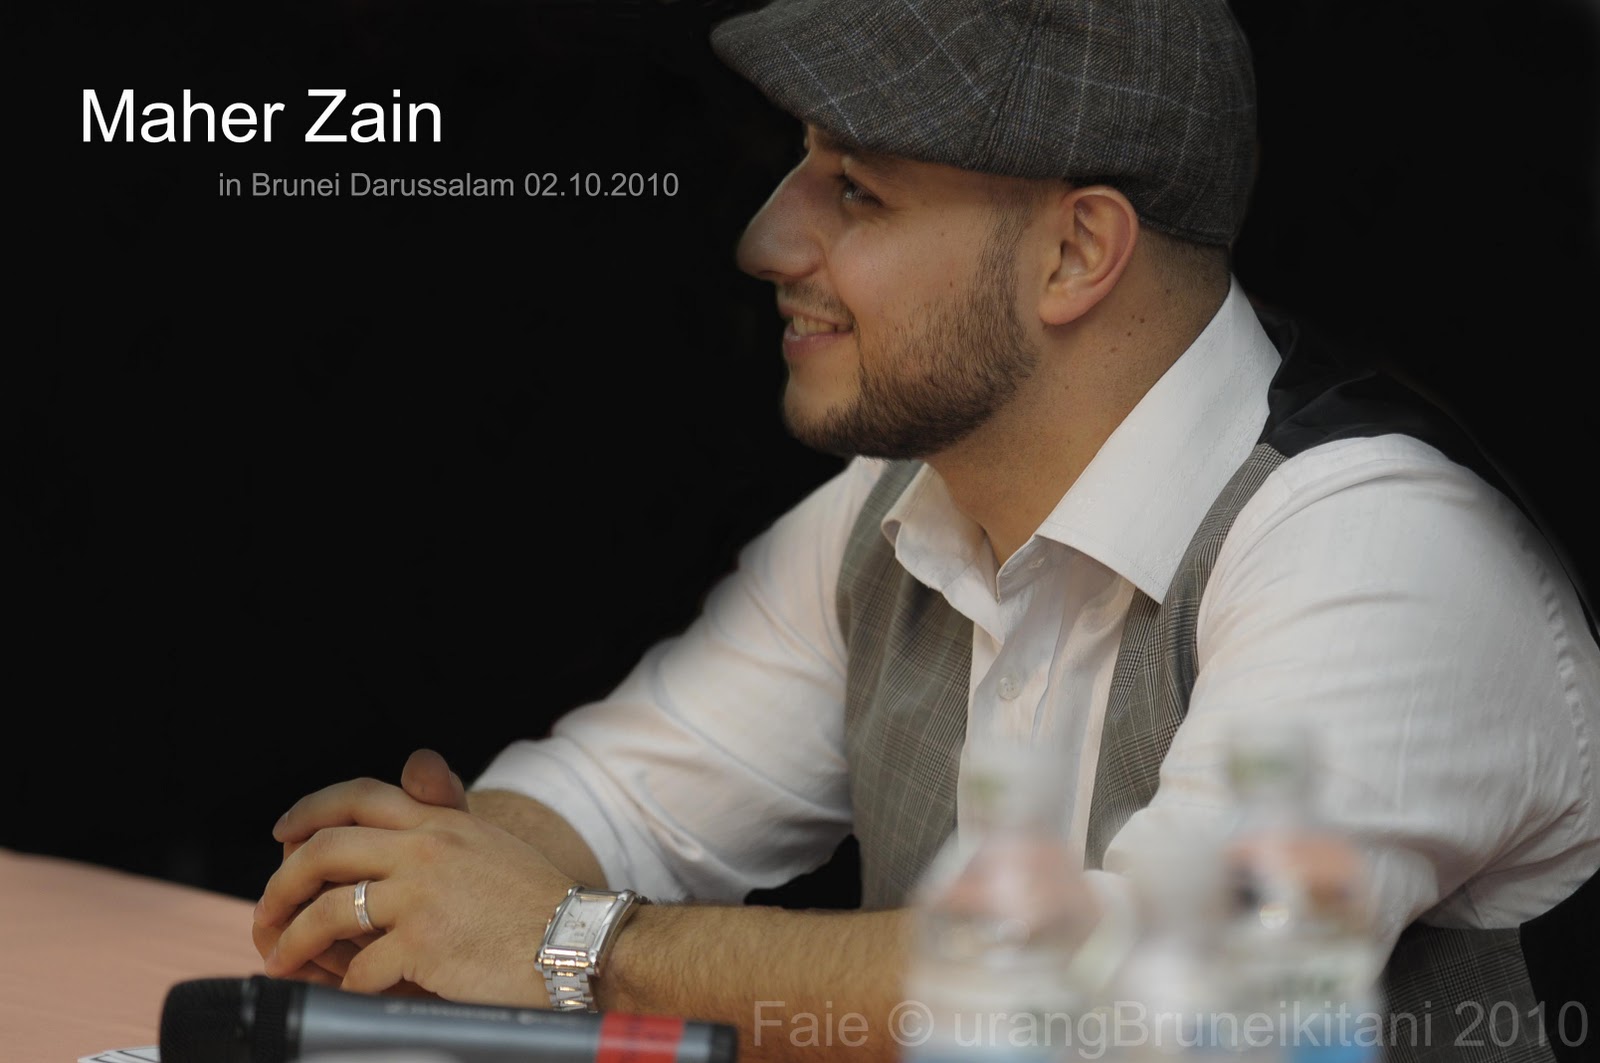 High Defination Wallpapers World: Maher Zain Wallpapers.